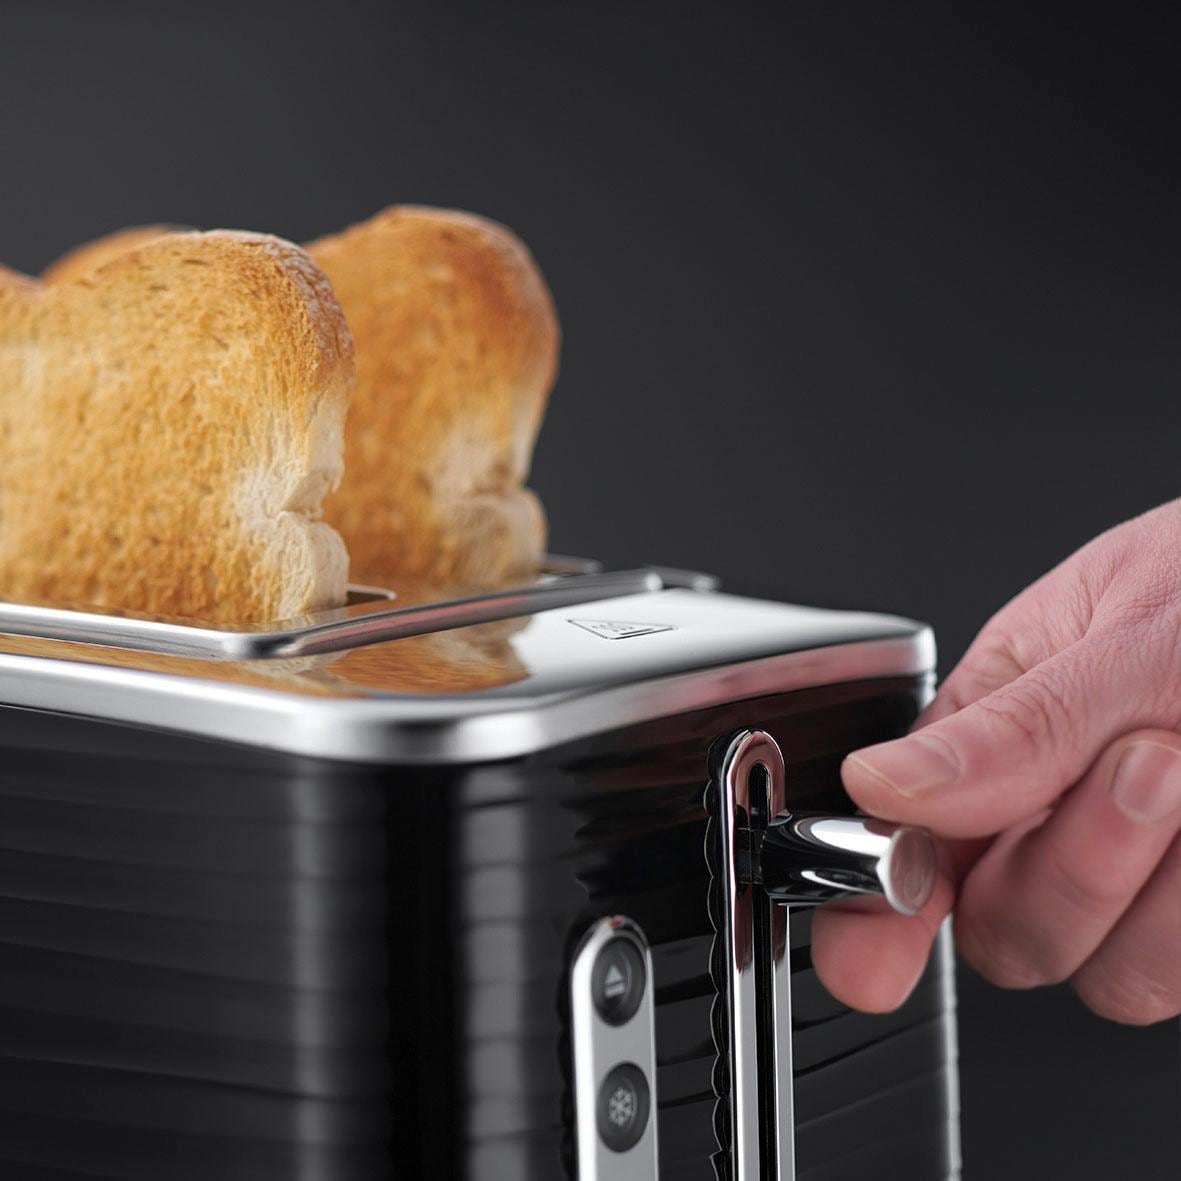 Toaster Schlitze, W kurze 1050 HOBBS 2 »Inspire kaufen online 24371-56«, RUSSELL